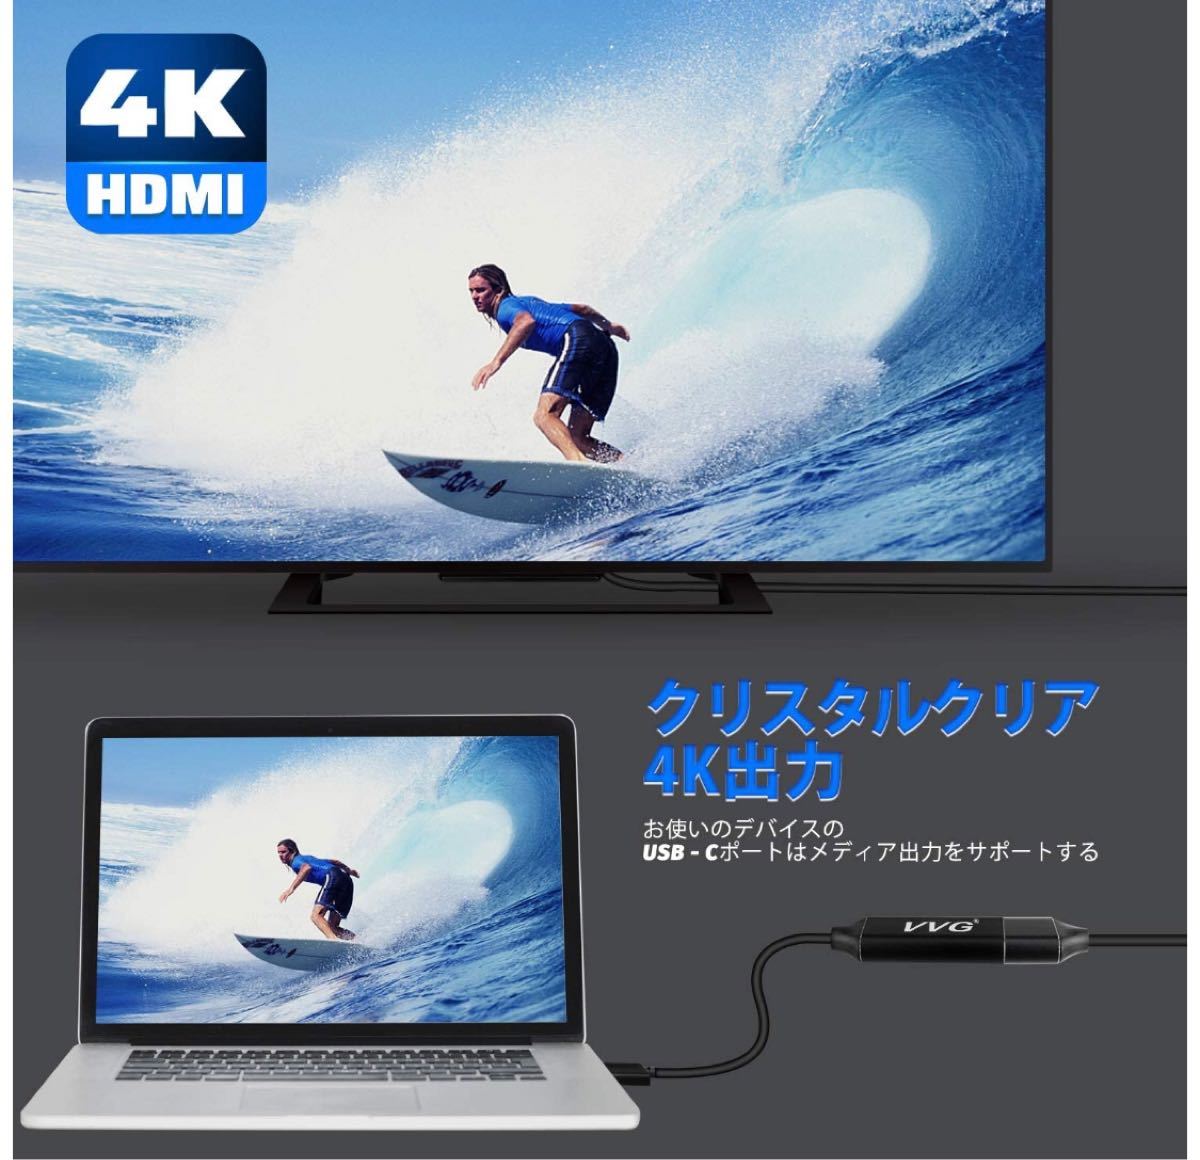 VVG USB Type C to HDMI 変換ケーブル